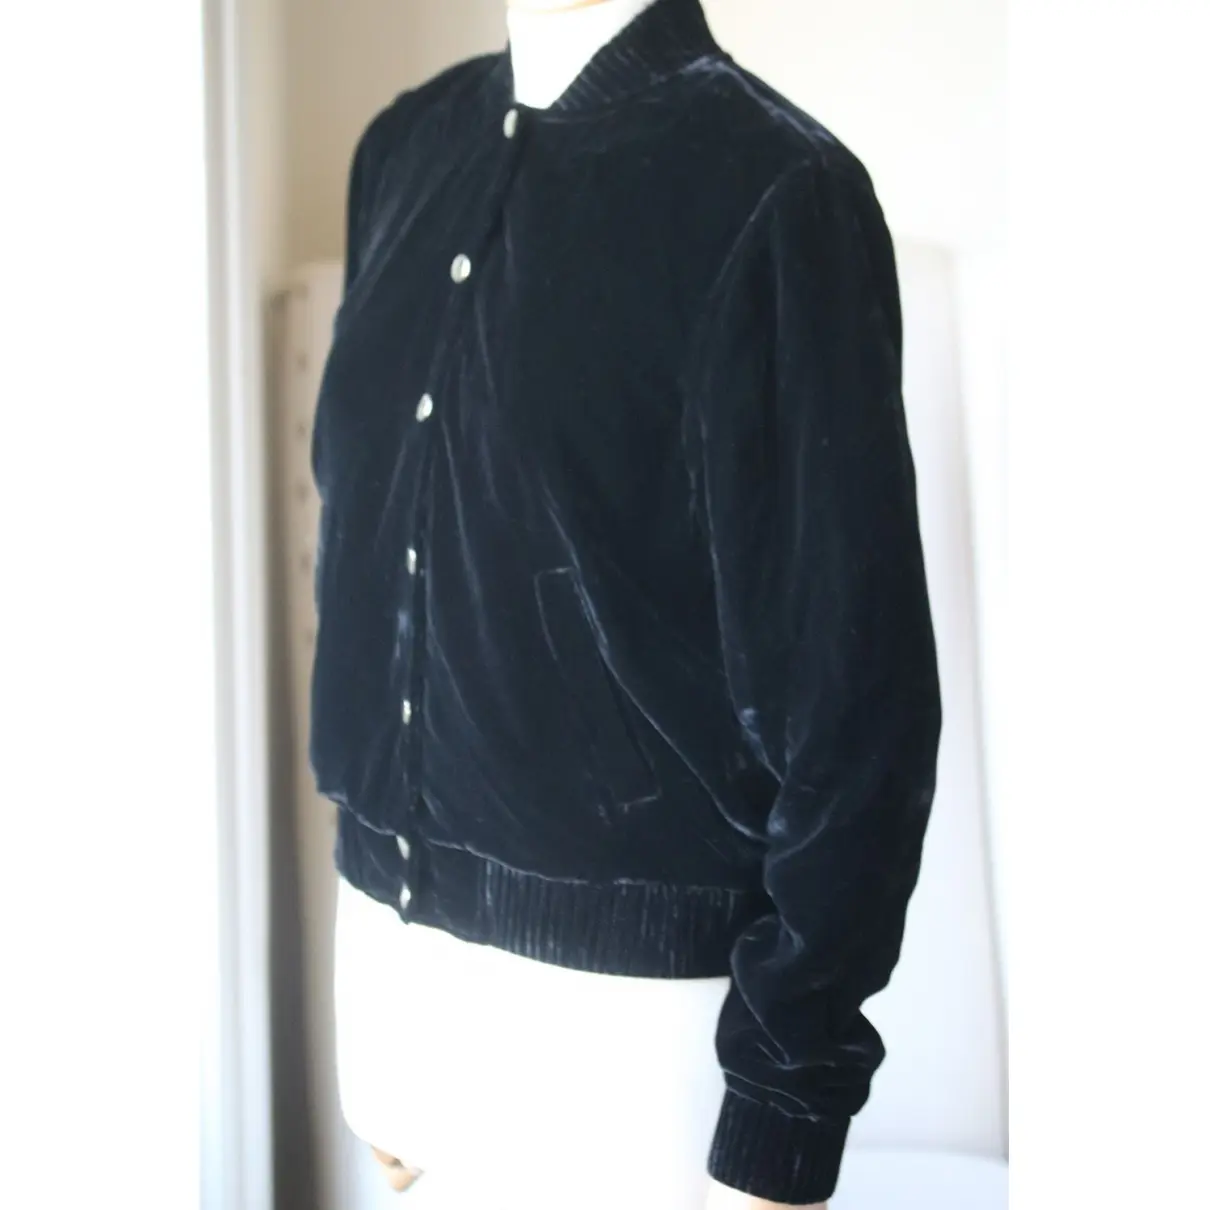 Buy The Perfext Velvet jacket online